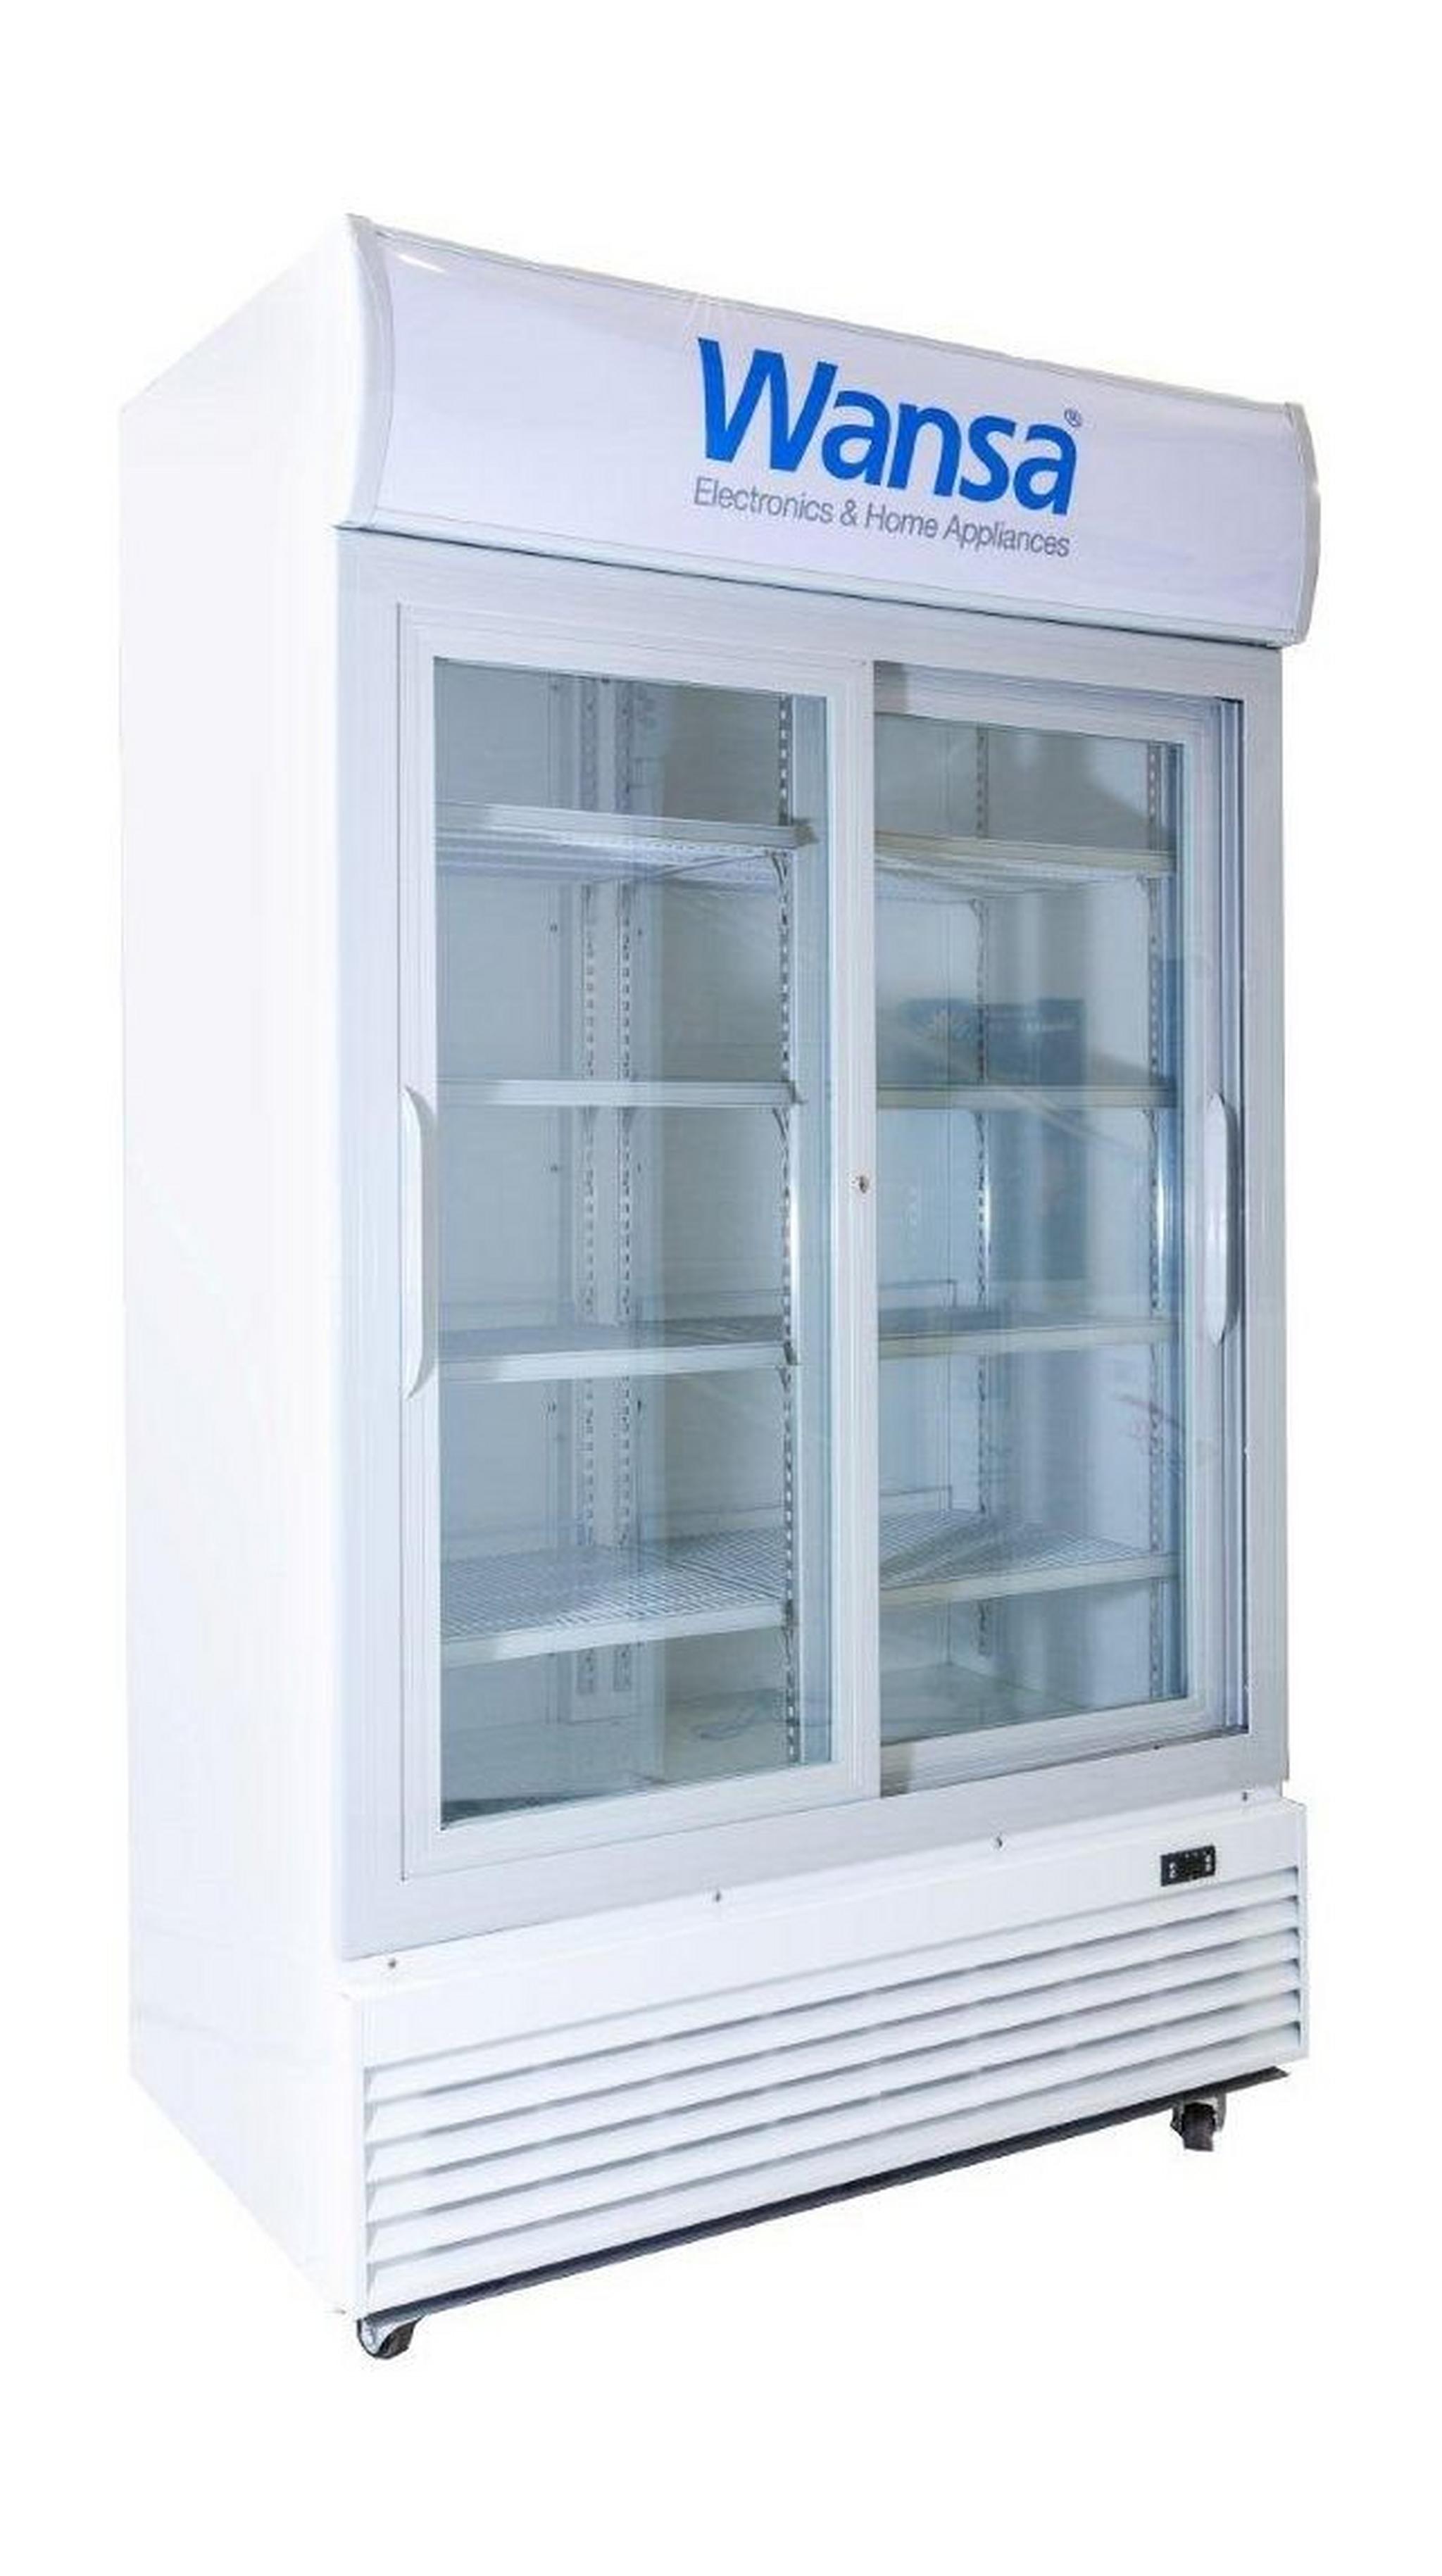 Wansa 35 Cft. Window Refrigerator (WUSC1000NFWT) - White